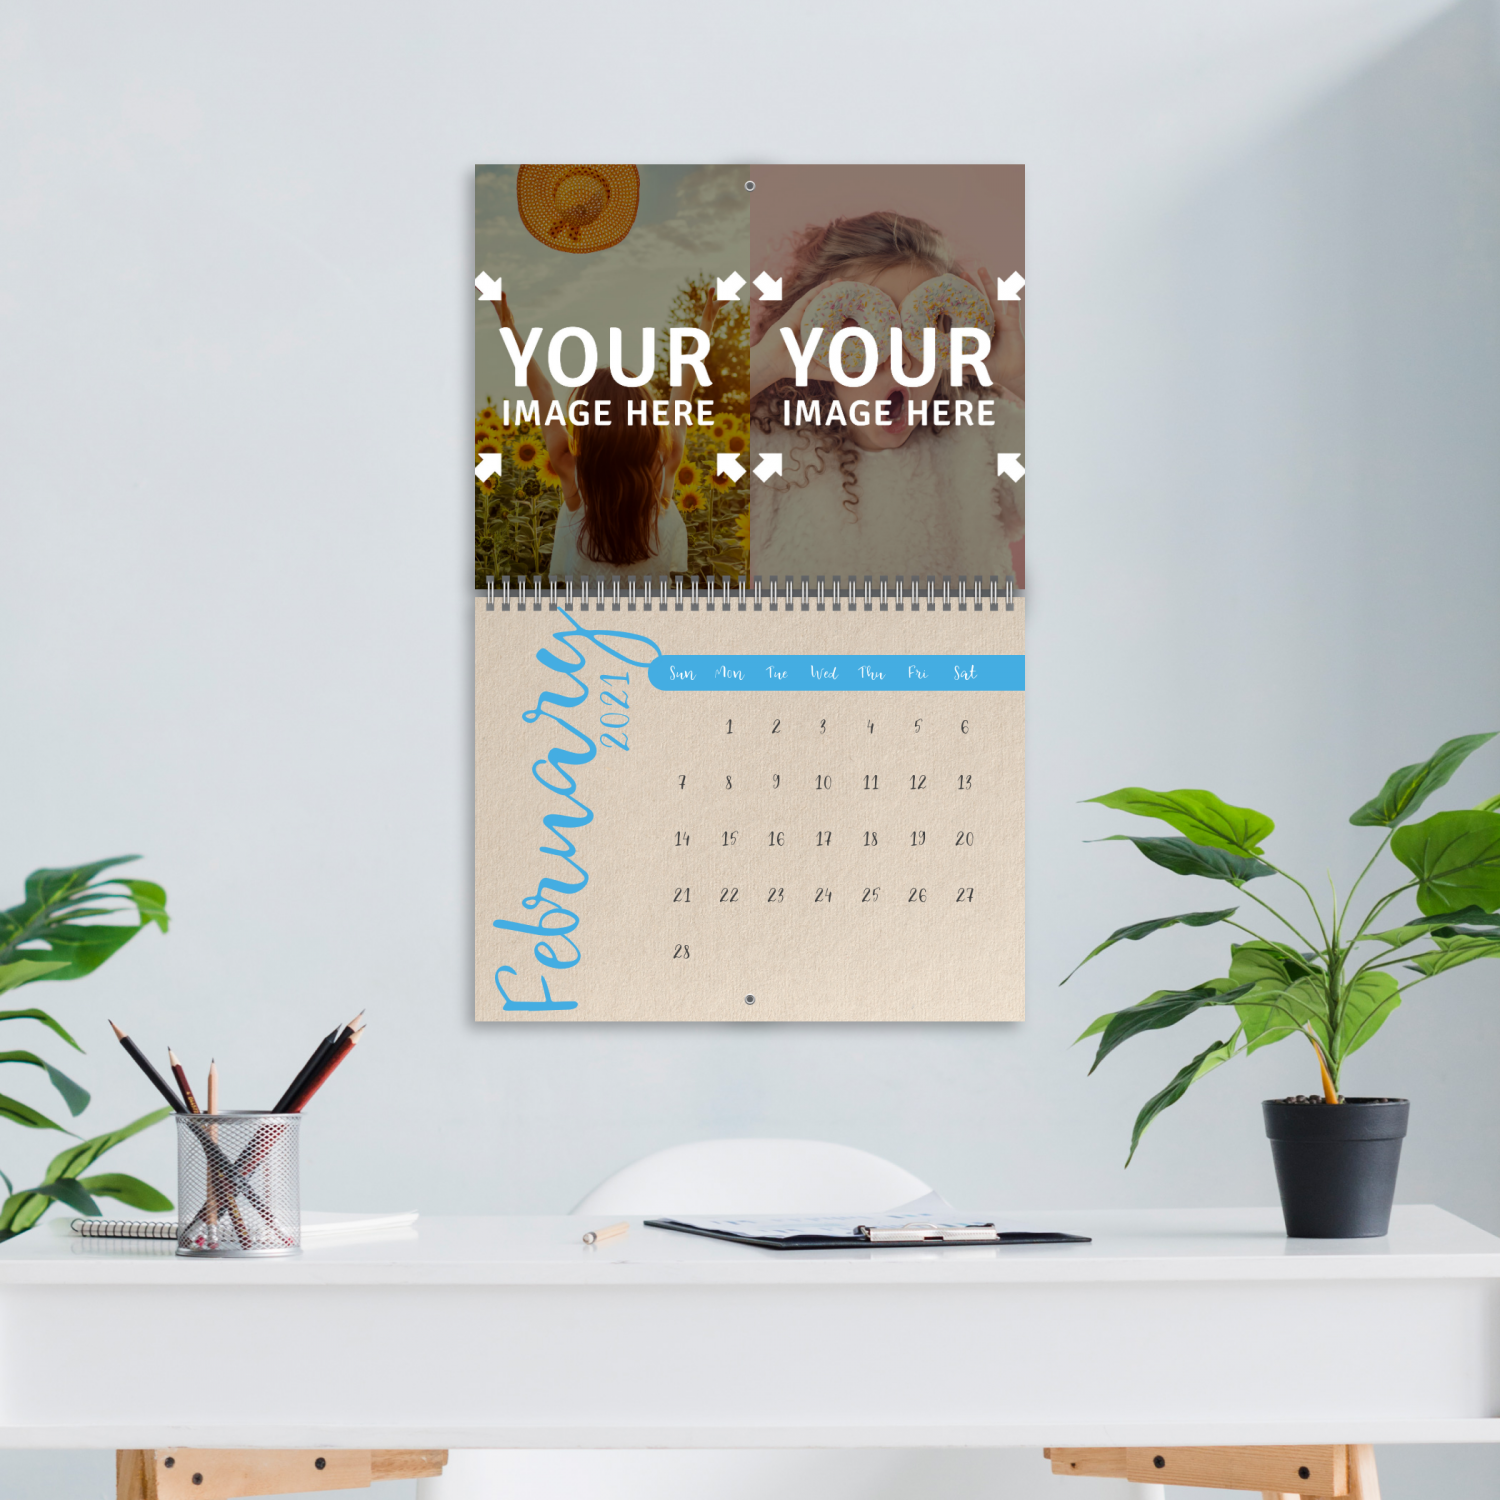 Custom Photo Wall Calendar - Add photos and customize online